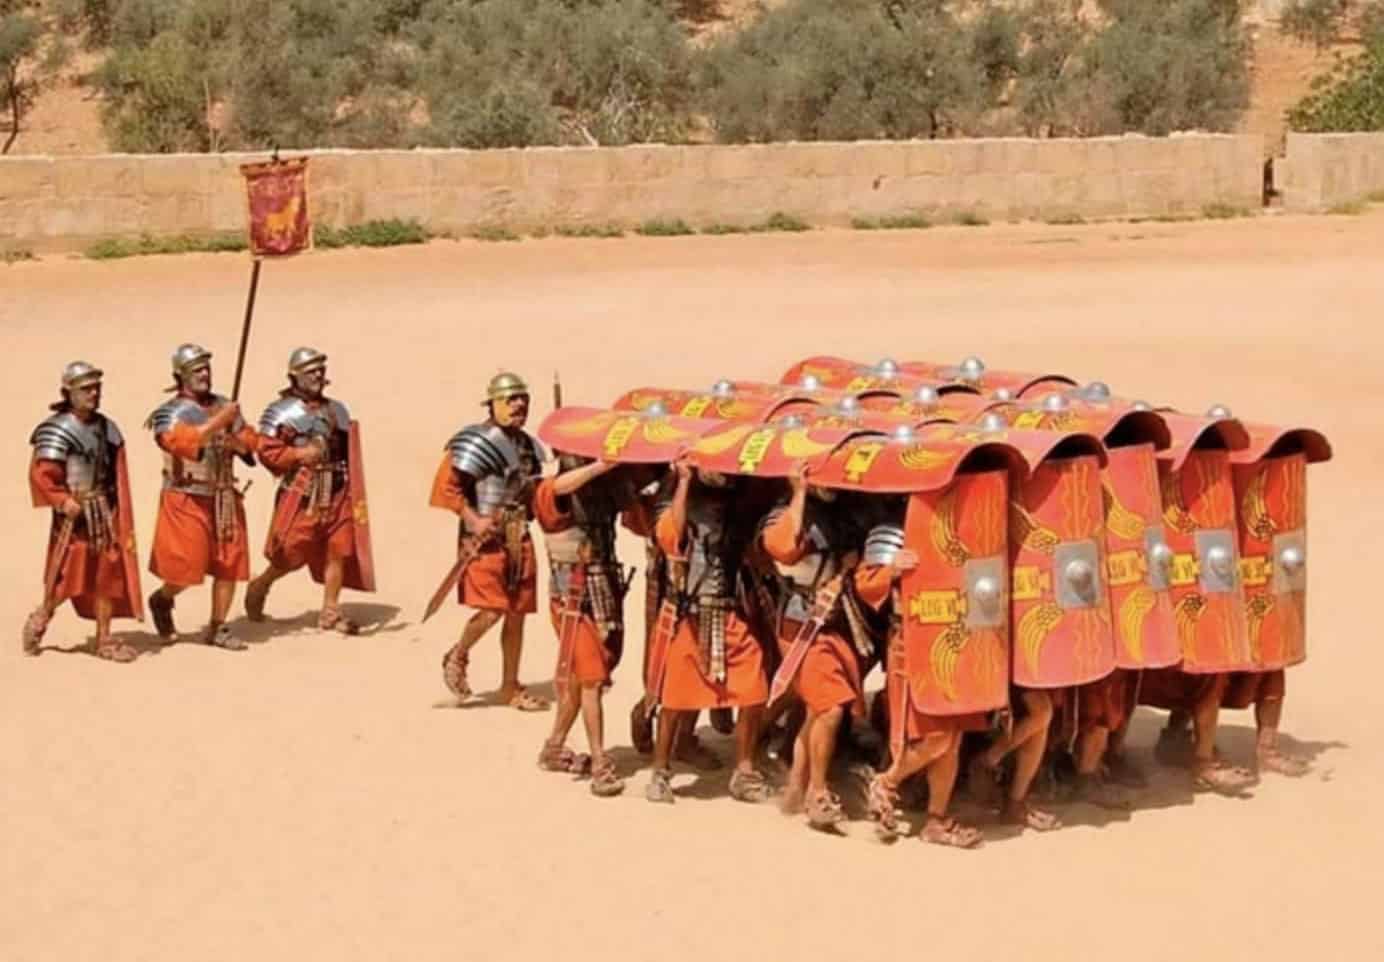 A small roman army